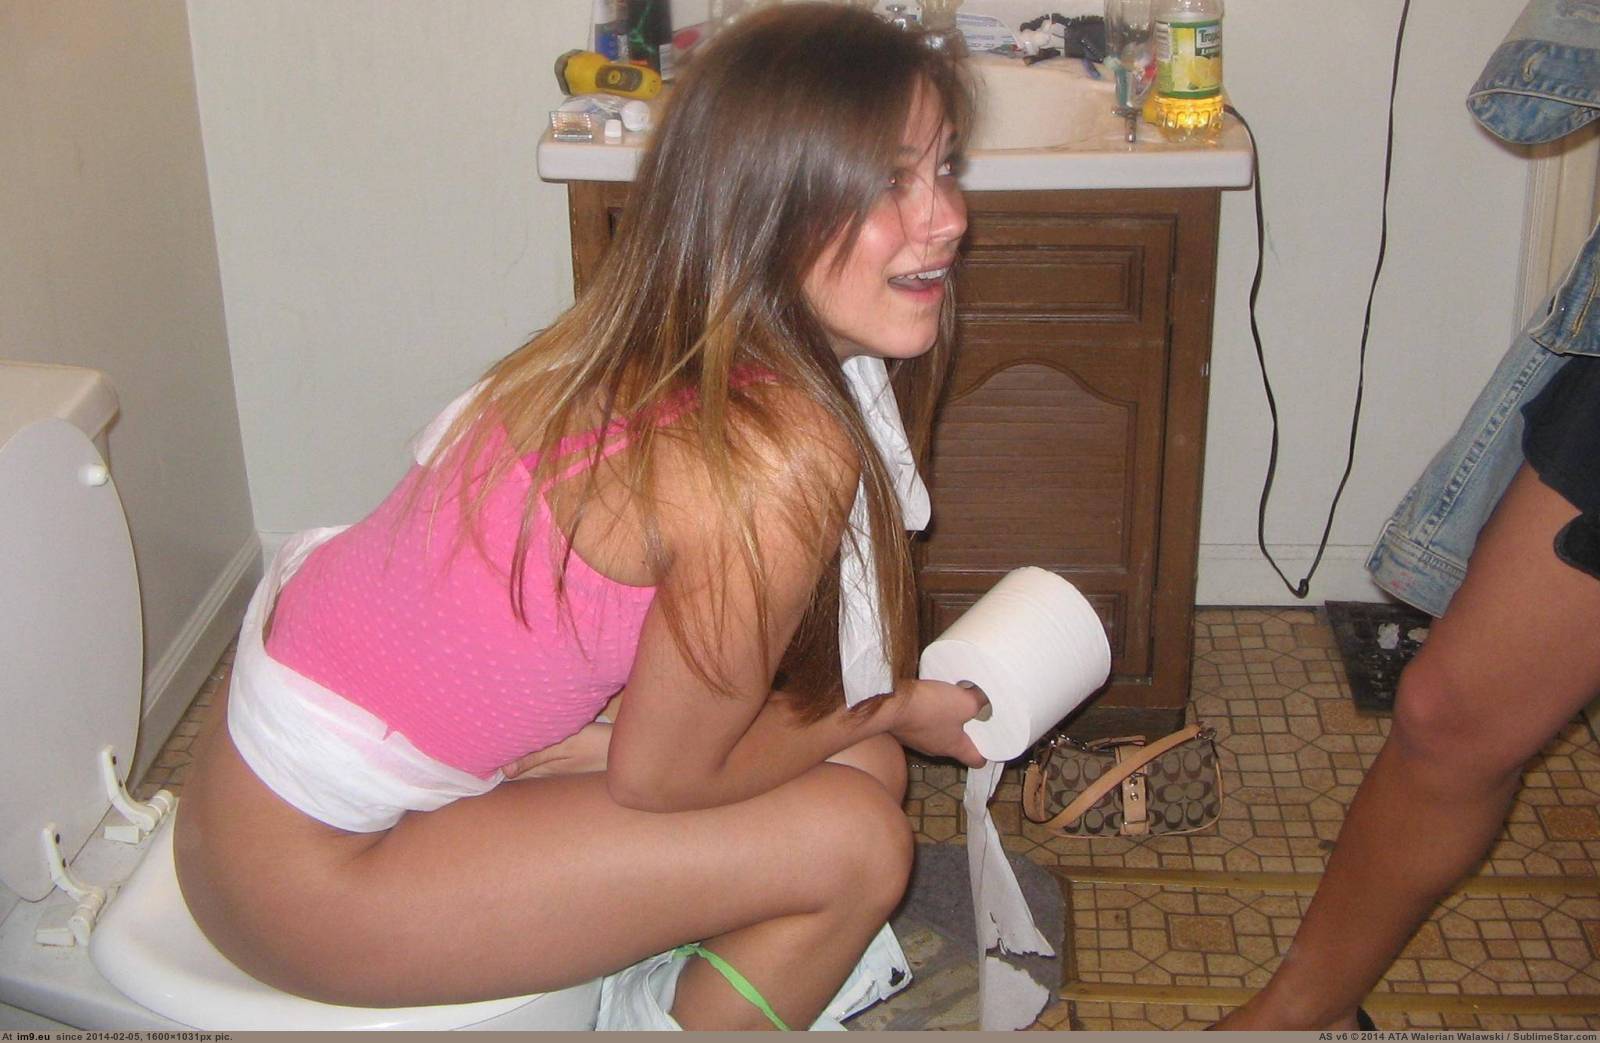 Wild Teens Pissing - Pic. #Porn #Girls #Teen #Toilet #Bowl #Toilets #Young #Peeing #Pissing,  150887B â€“ Teen Girls Pissing Porn (Young Teens Toilet Peeing)